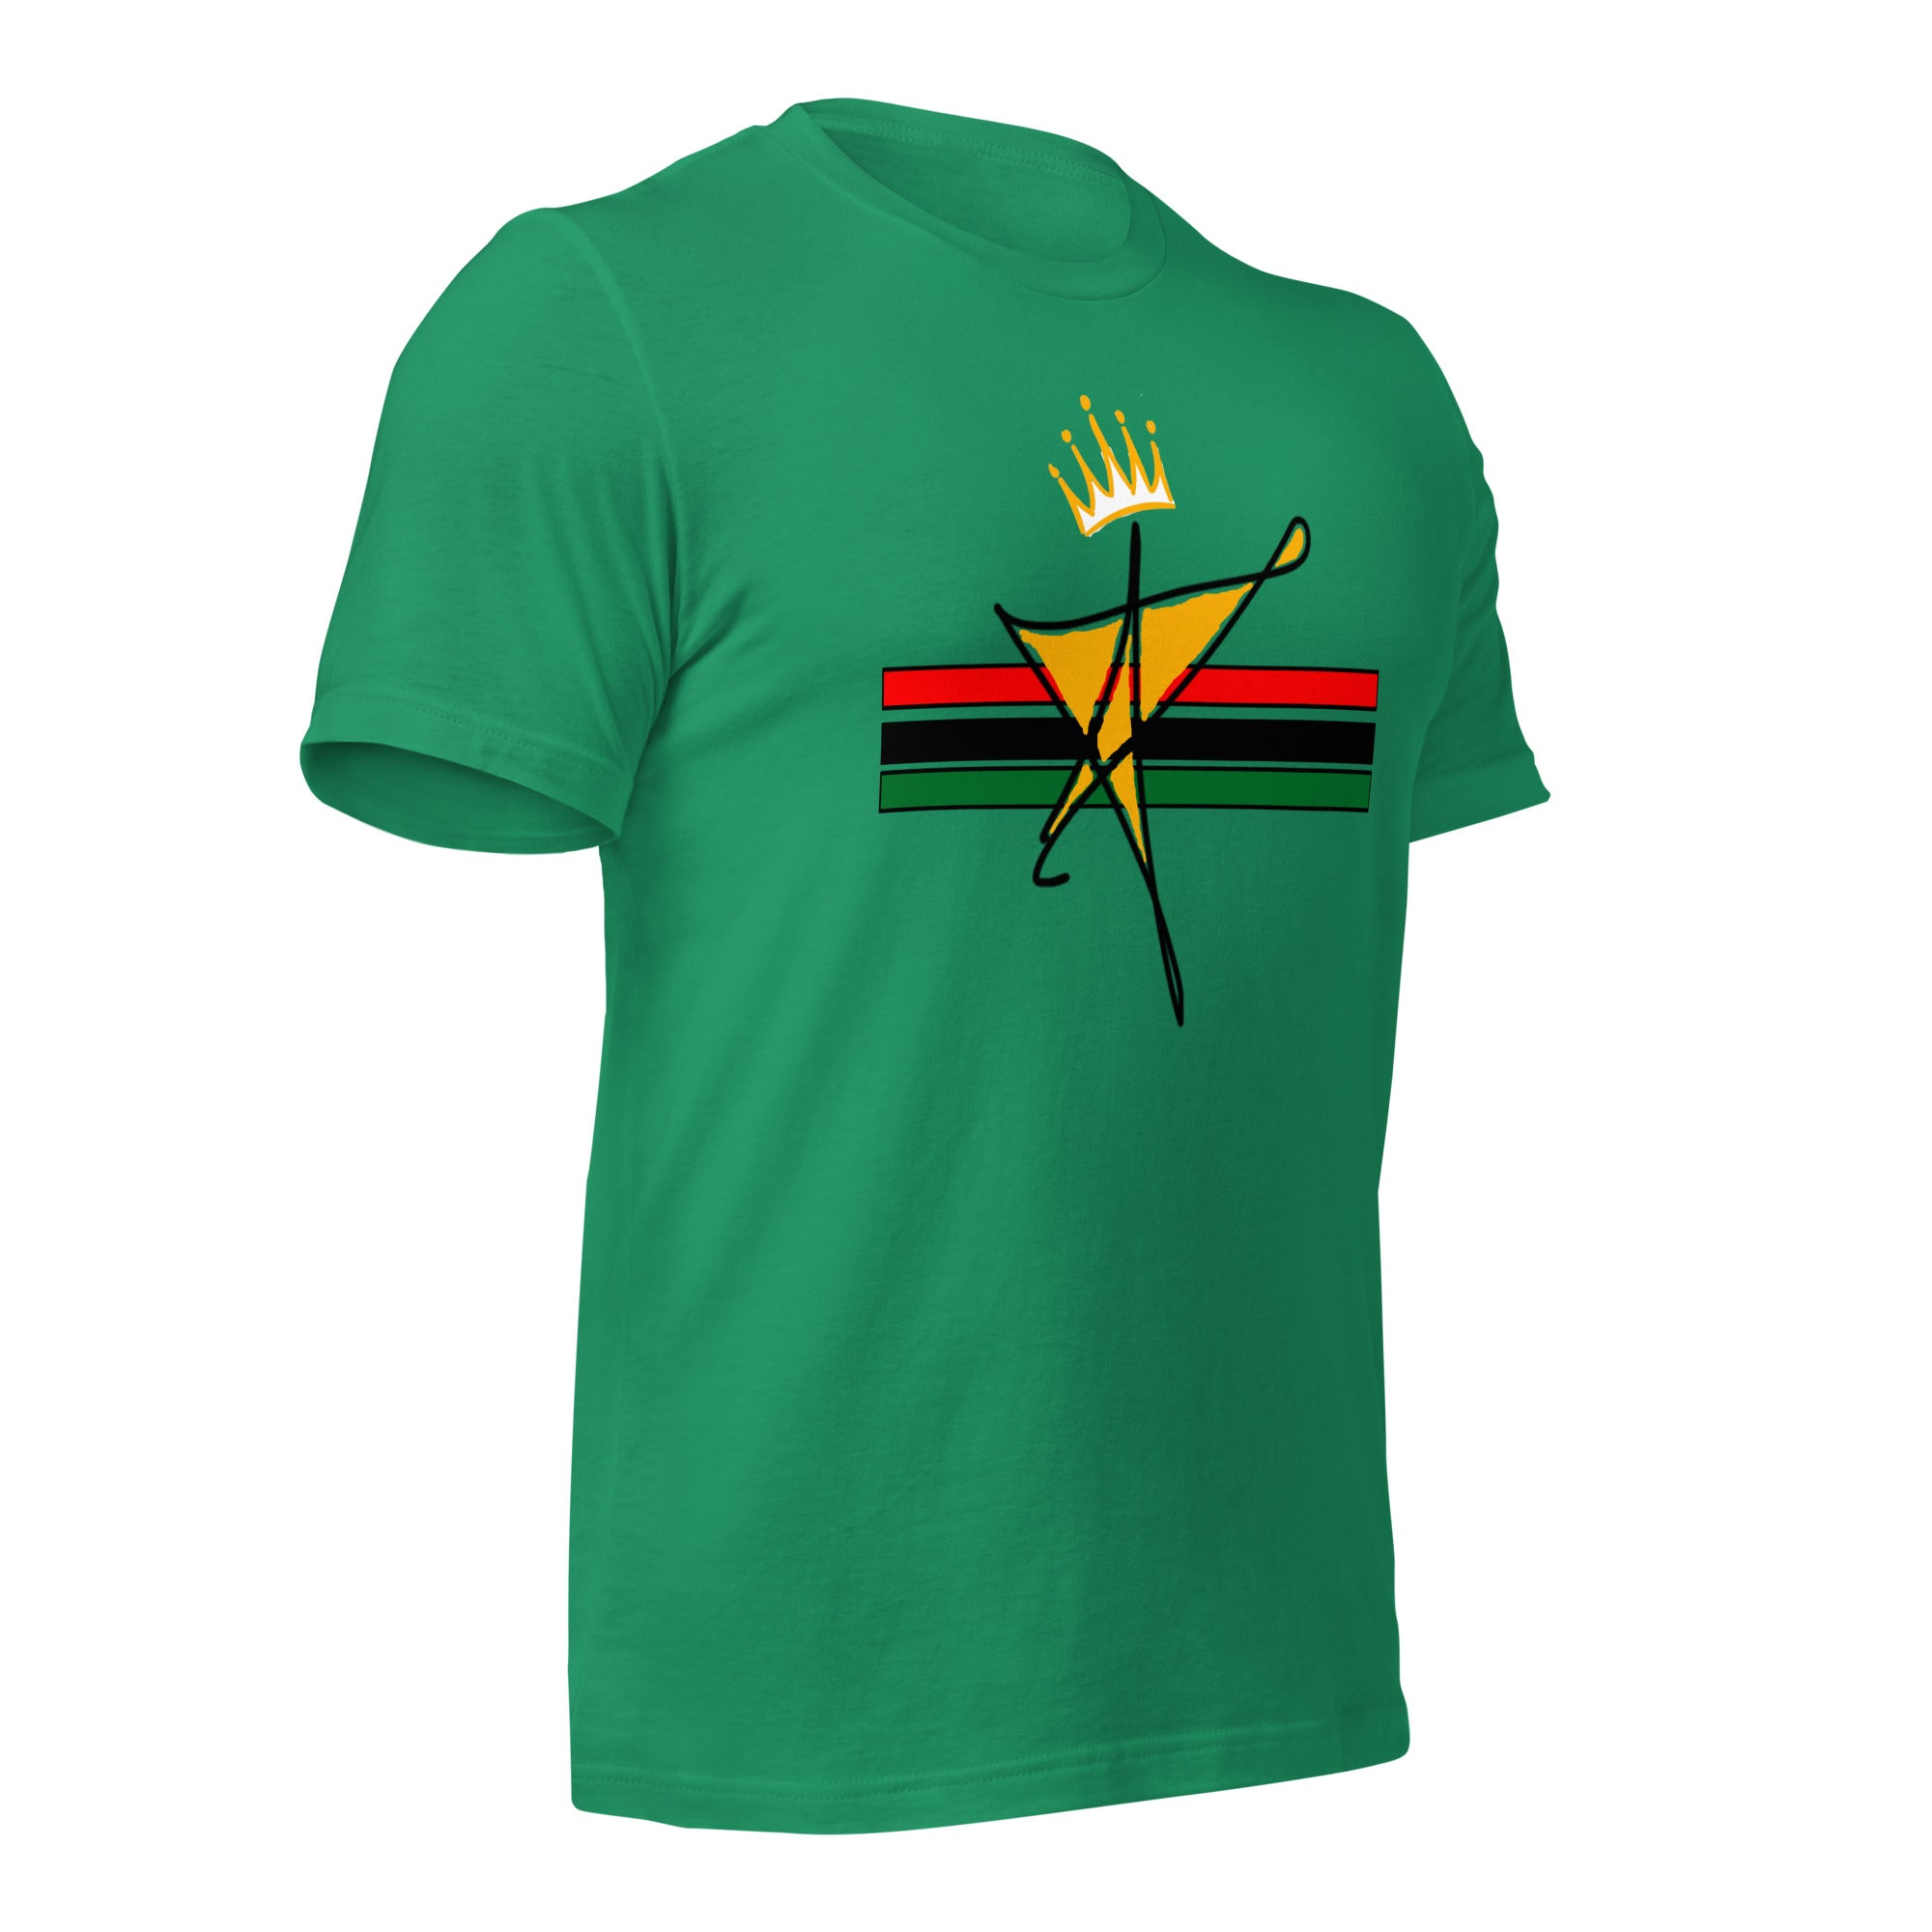 The Black Star Of The Tribe Of Judah Unisex t-shirt